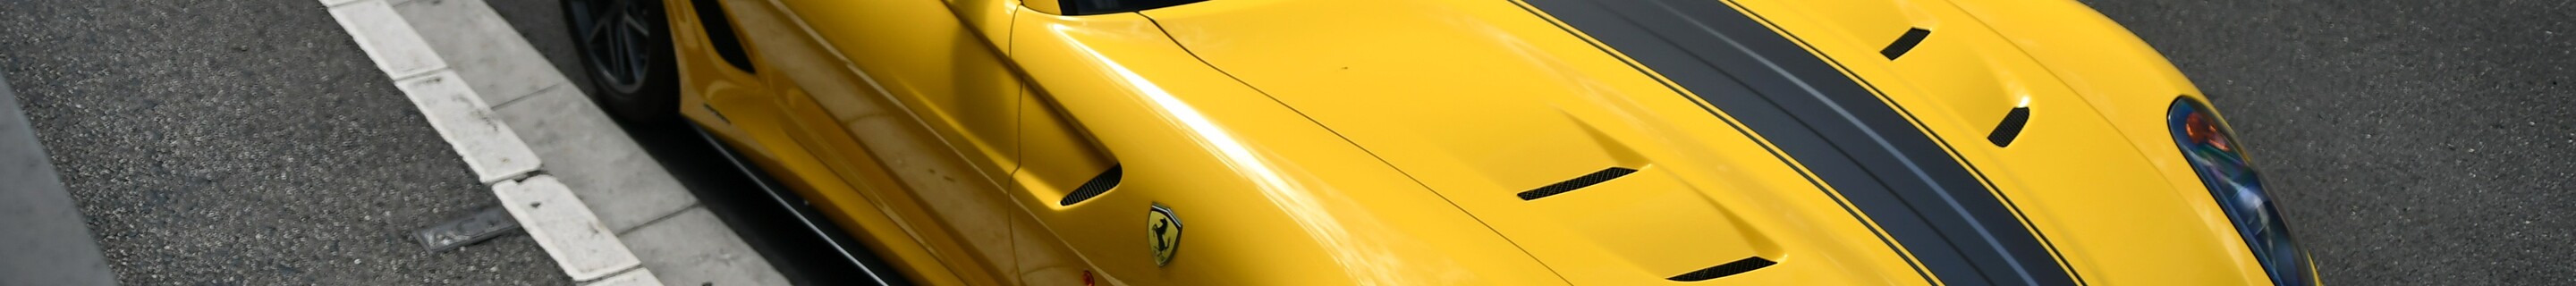 Ferrari 599 GTO